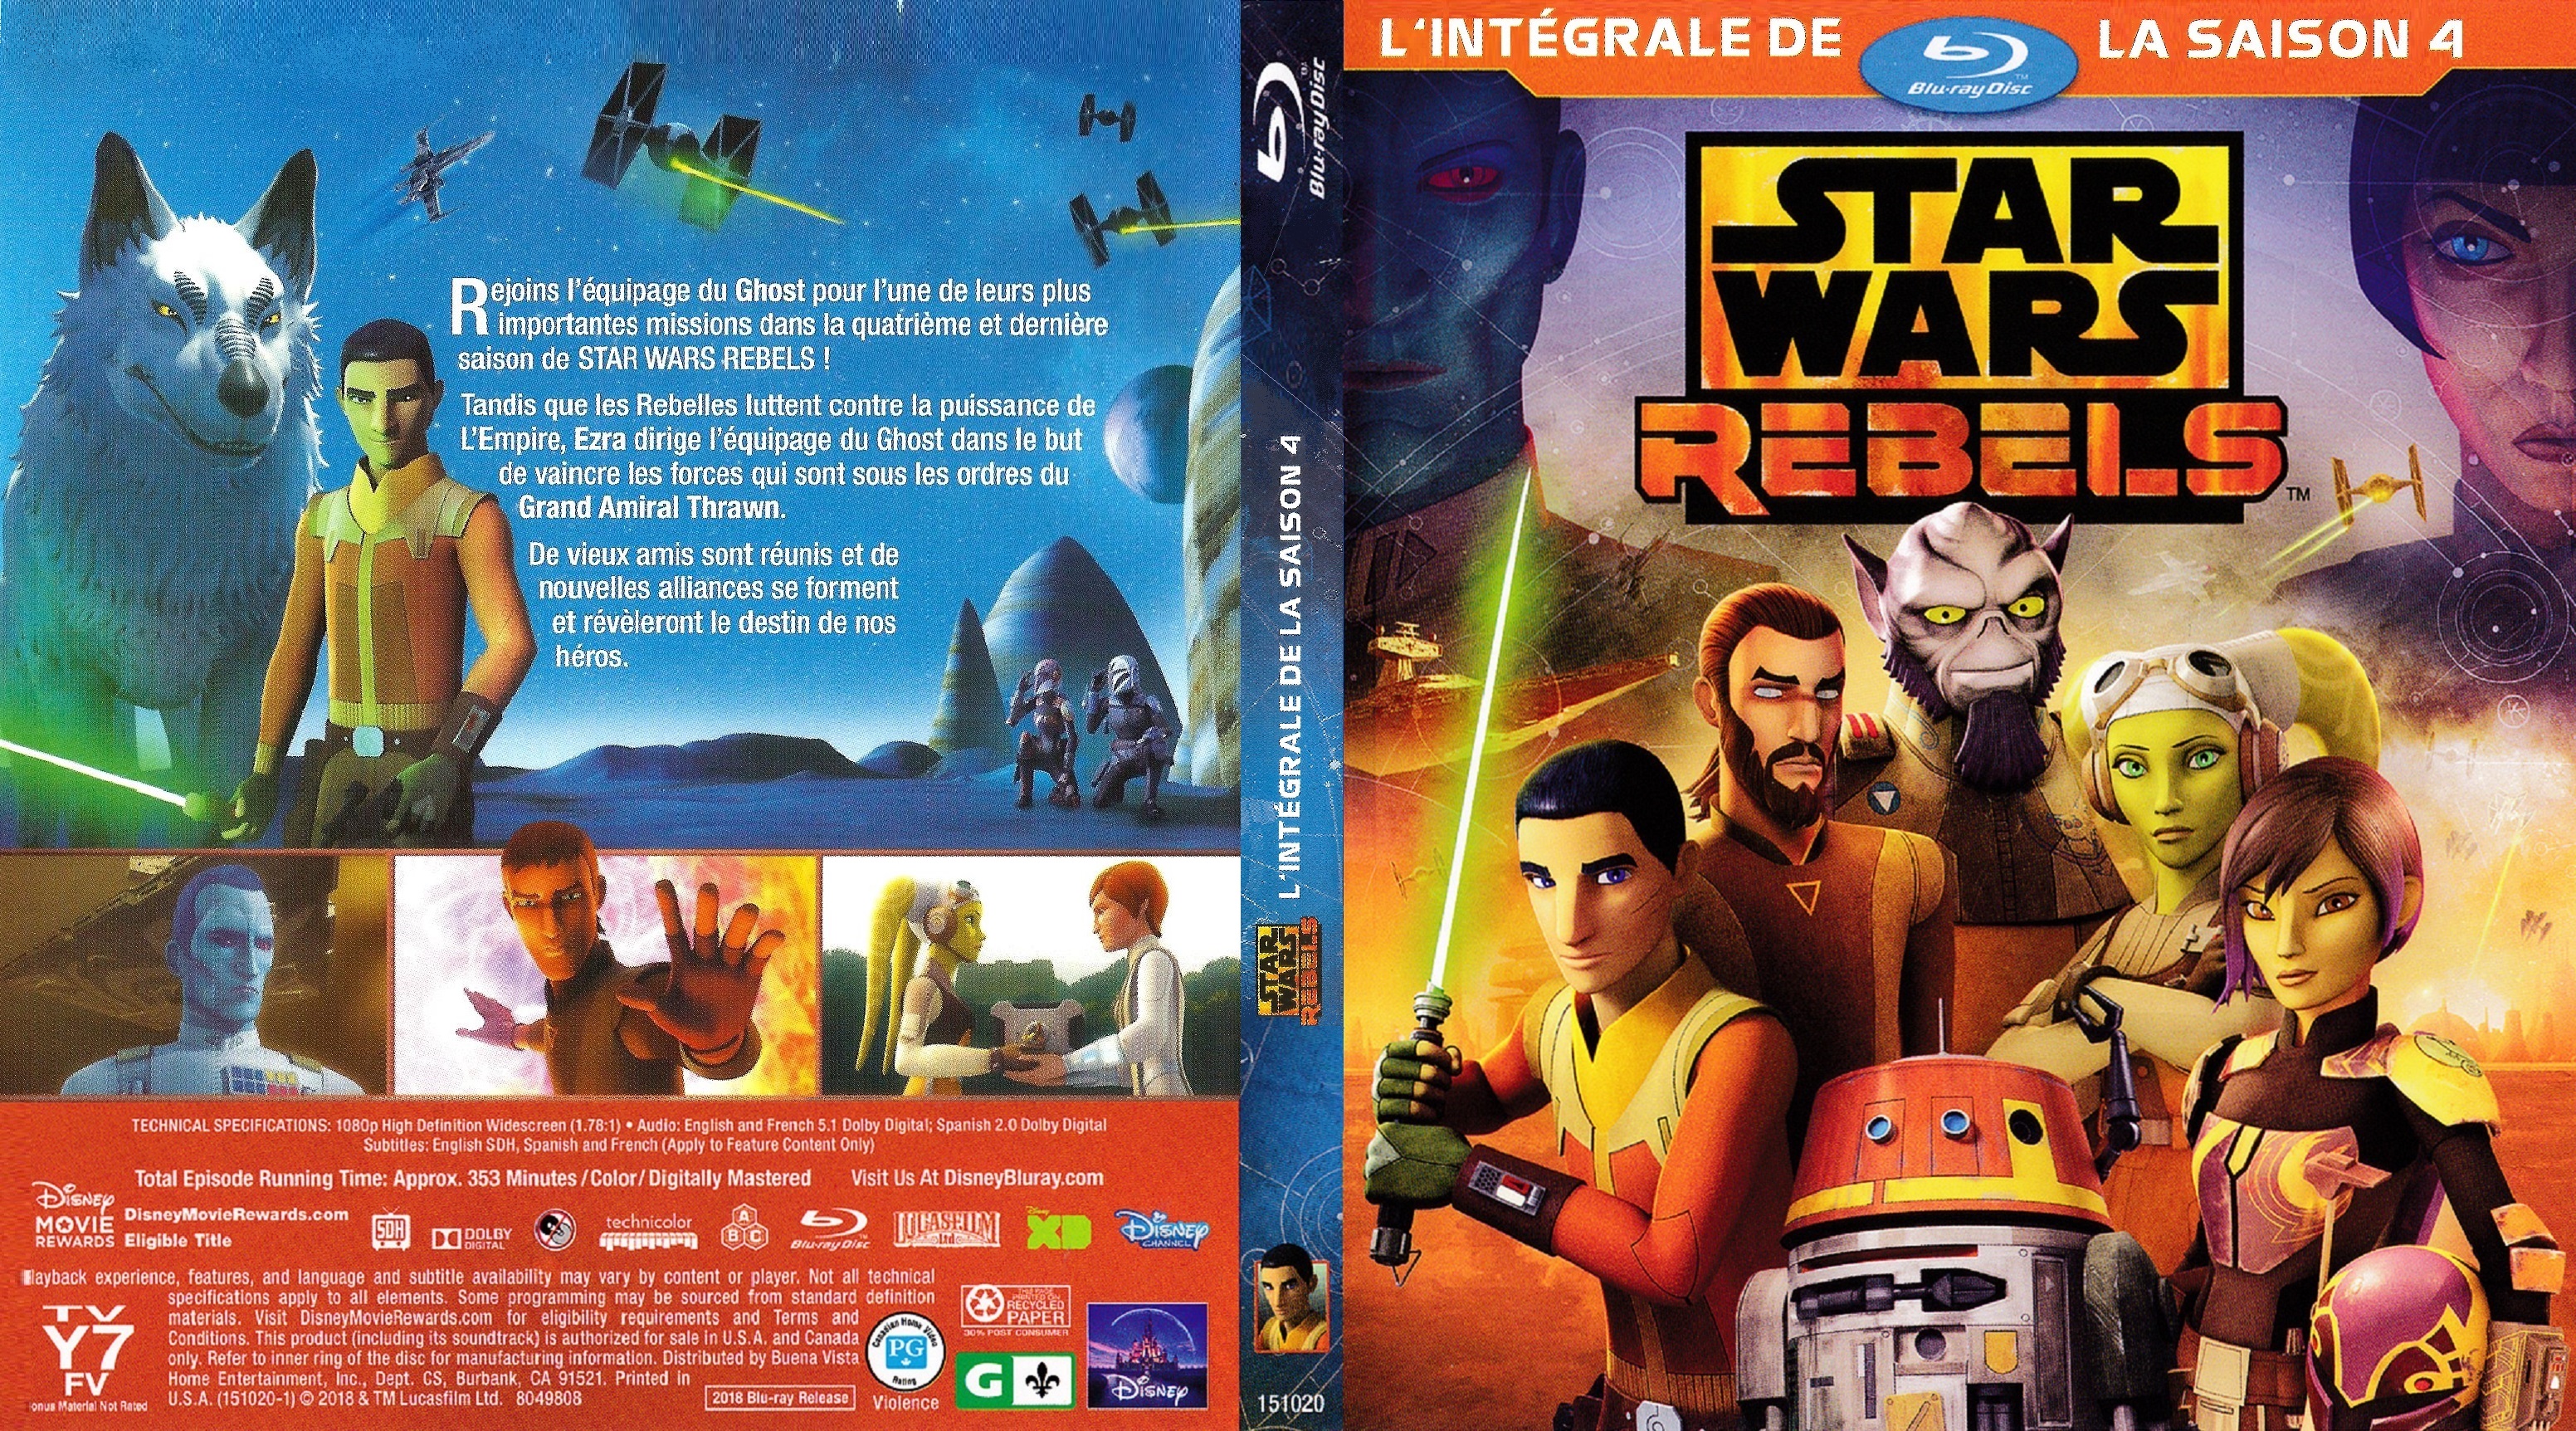 Jaquette DVD Star Wars Rebels saison 4 custom (BLU-RAY) v2